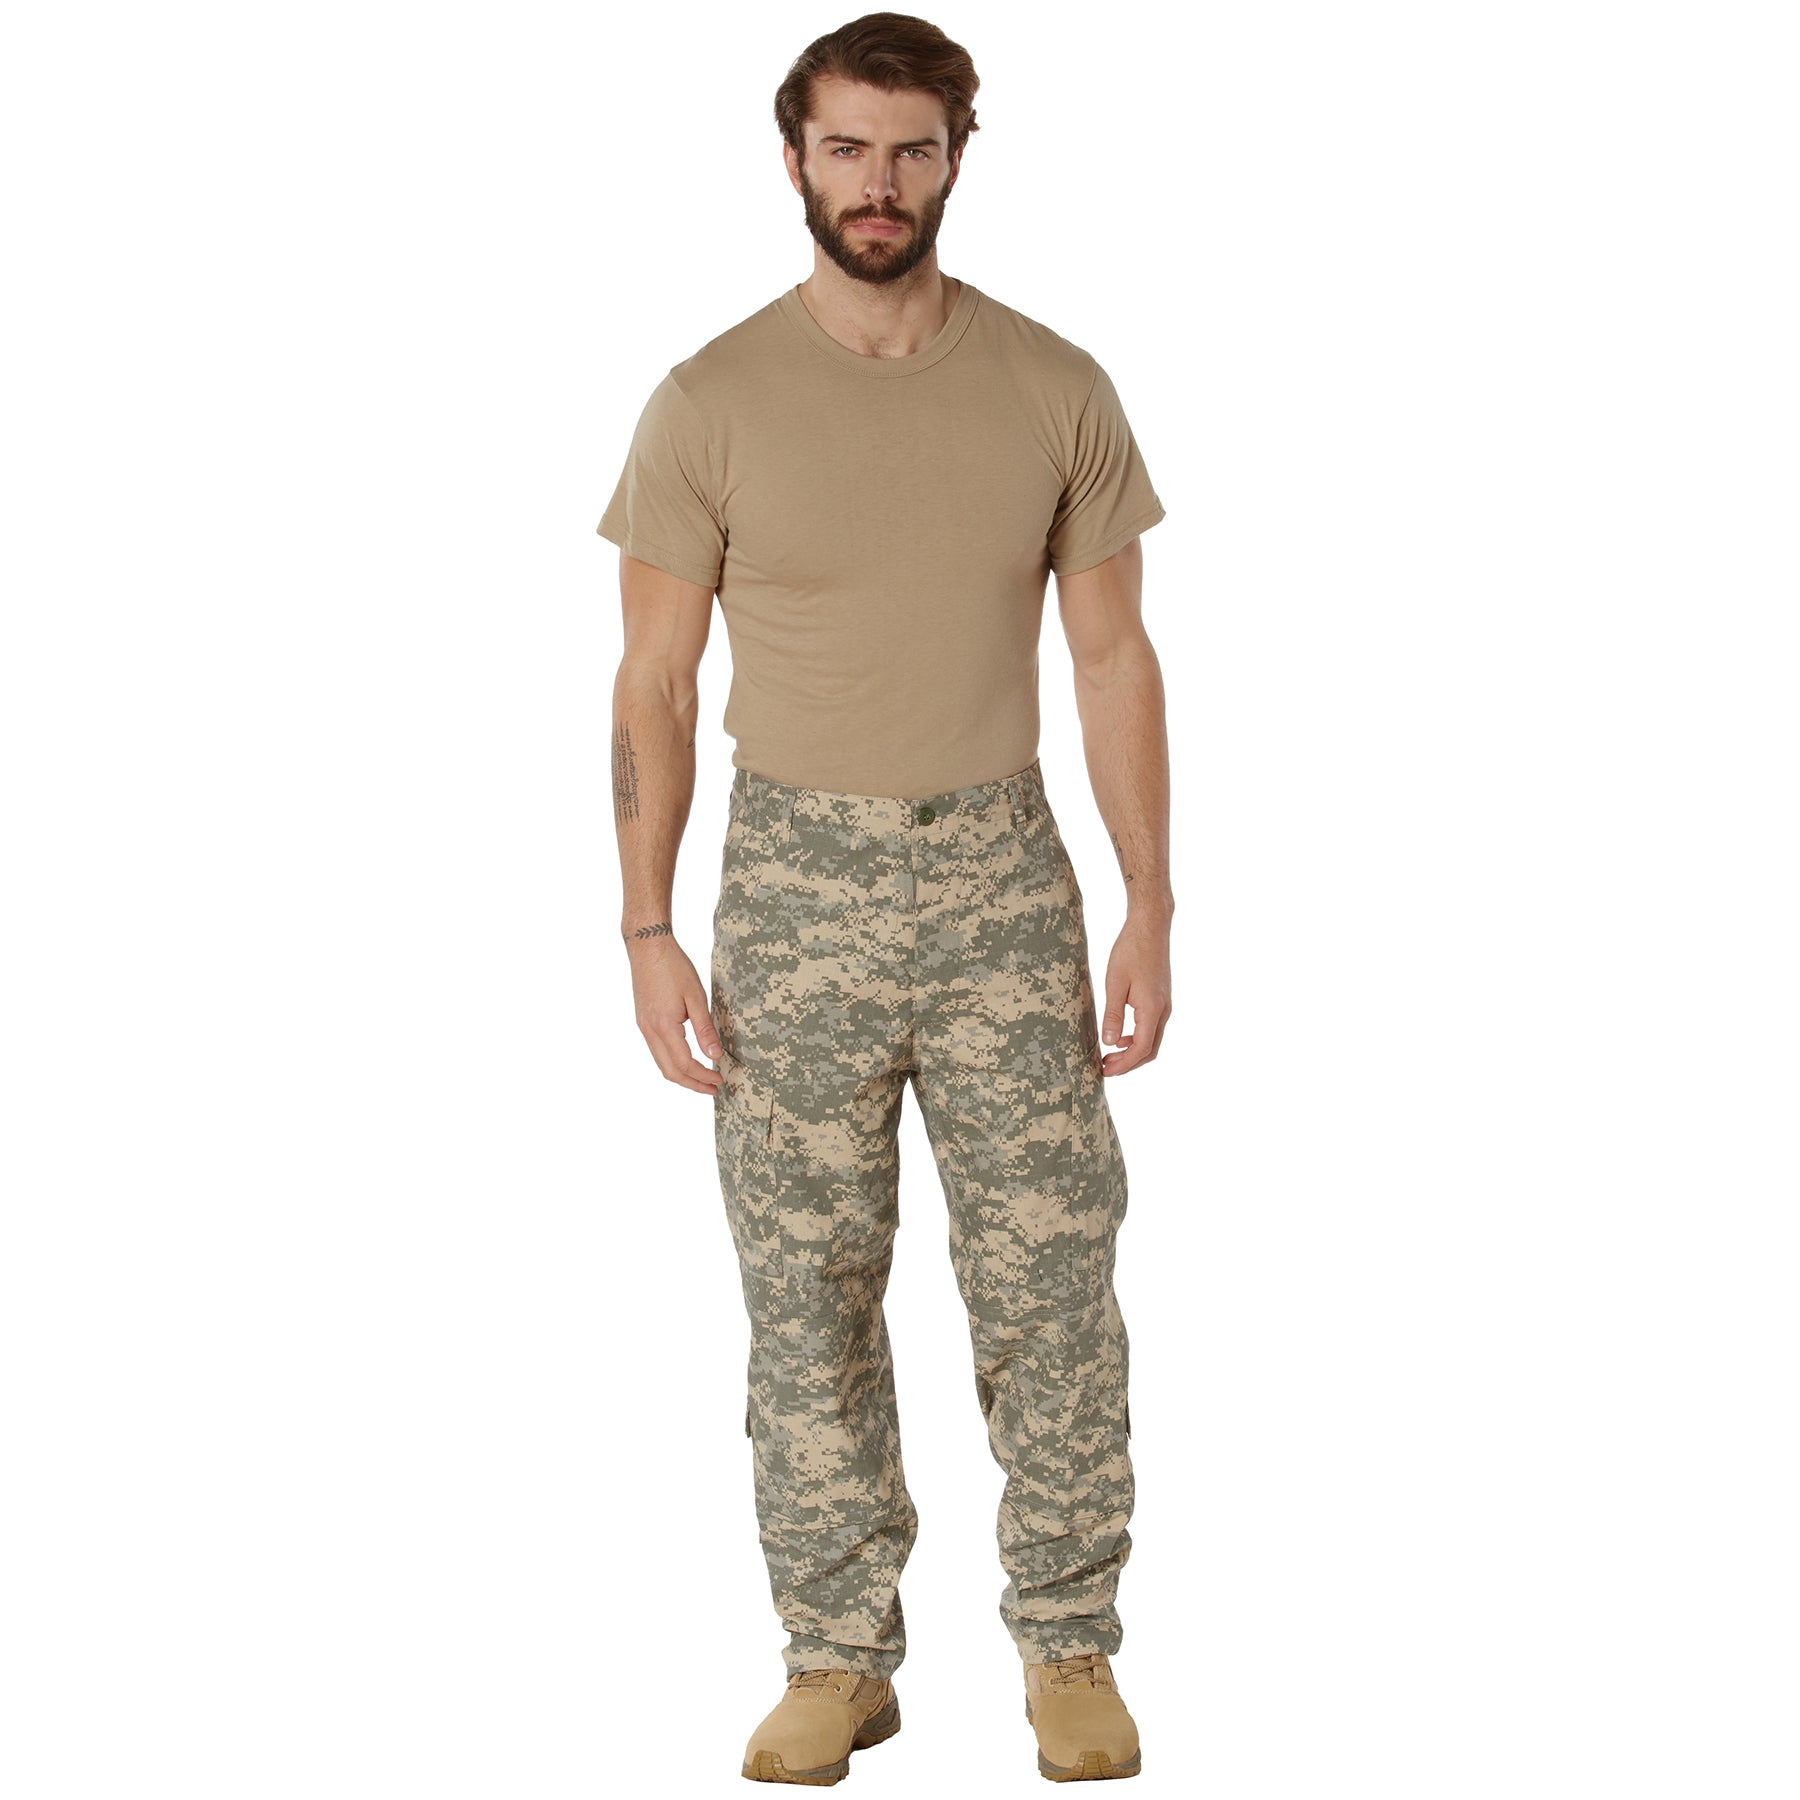 [Military] Digital Camo Poly/Cotton Rip-Stop Combat Uniform Pants ACU Digital Camo